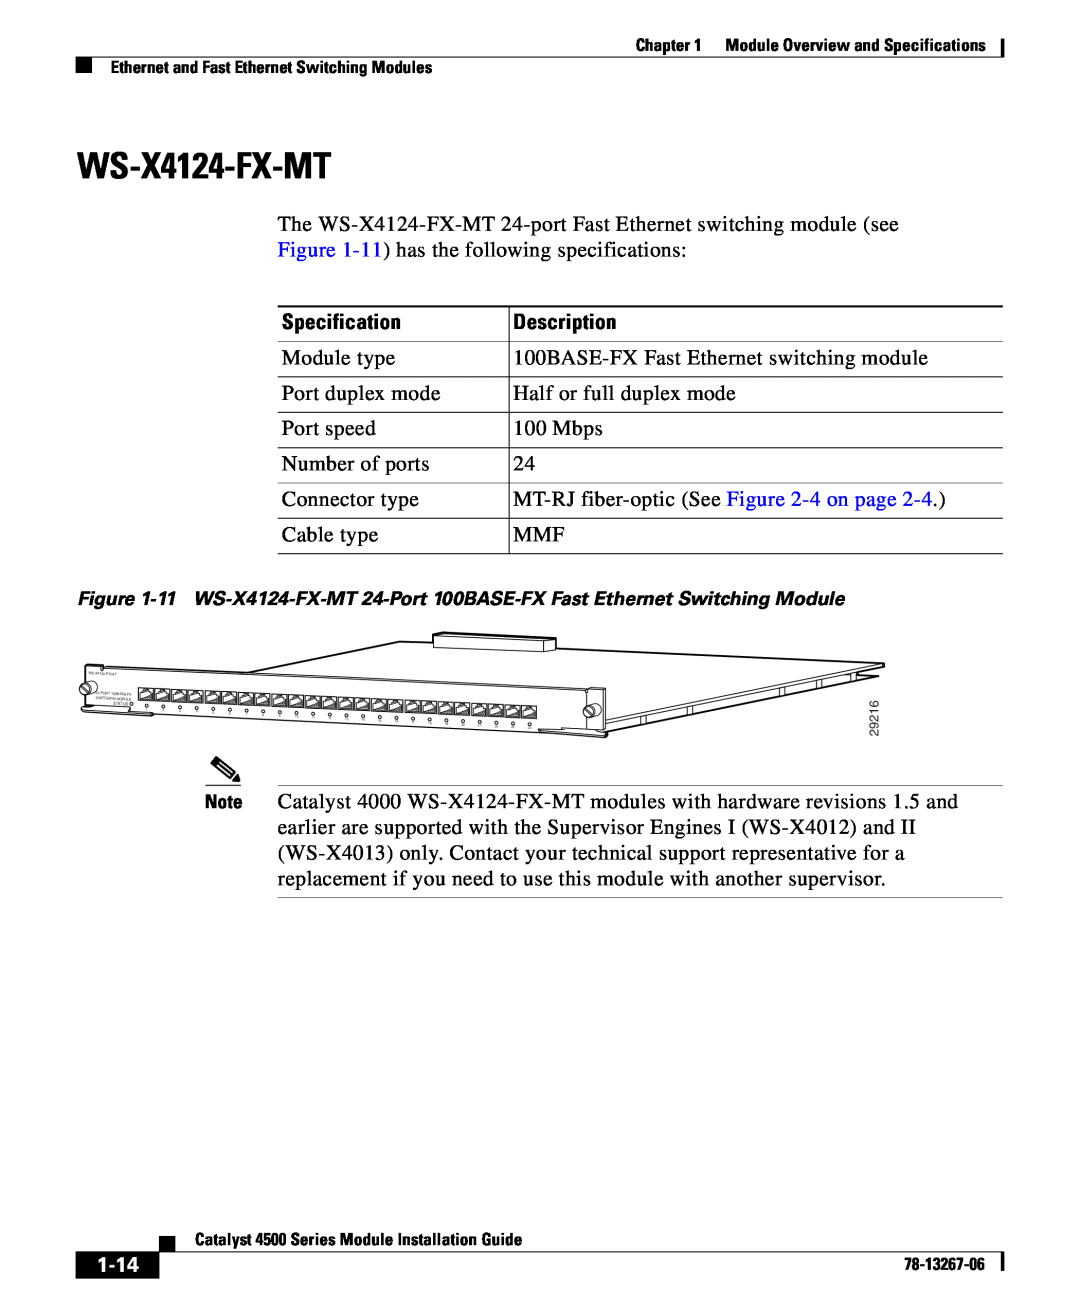 Cisco Systems 4000 specifications WS-X4124-FX-MT, 1-14, Specification, Description 